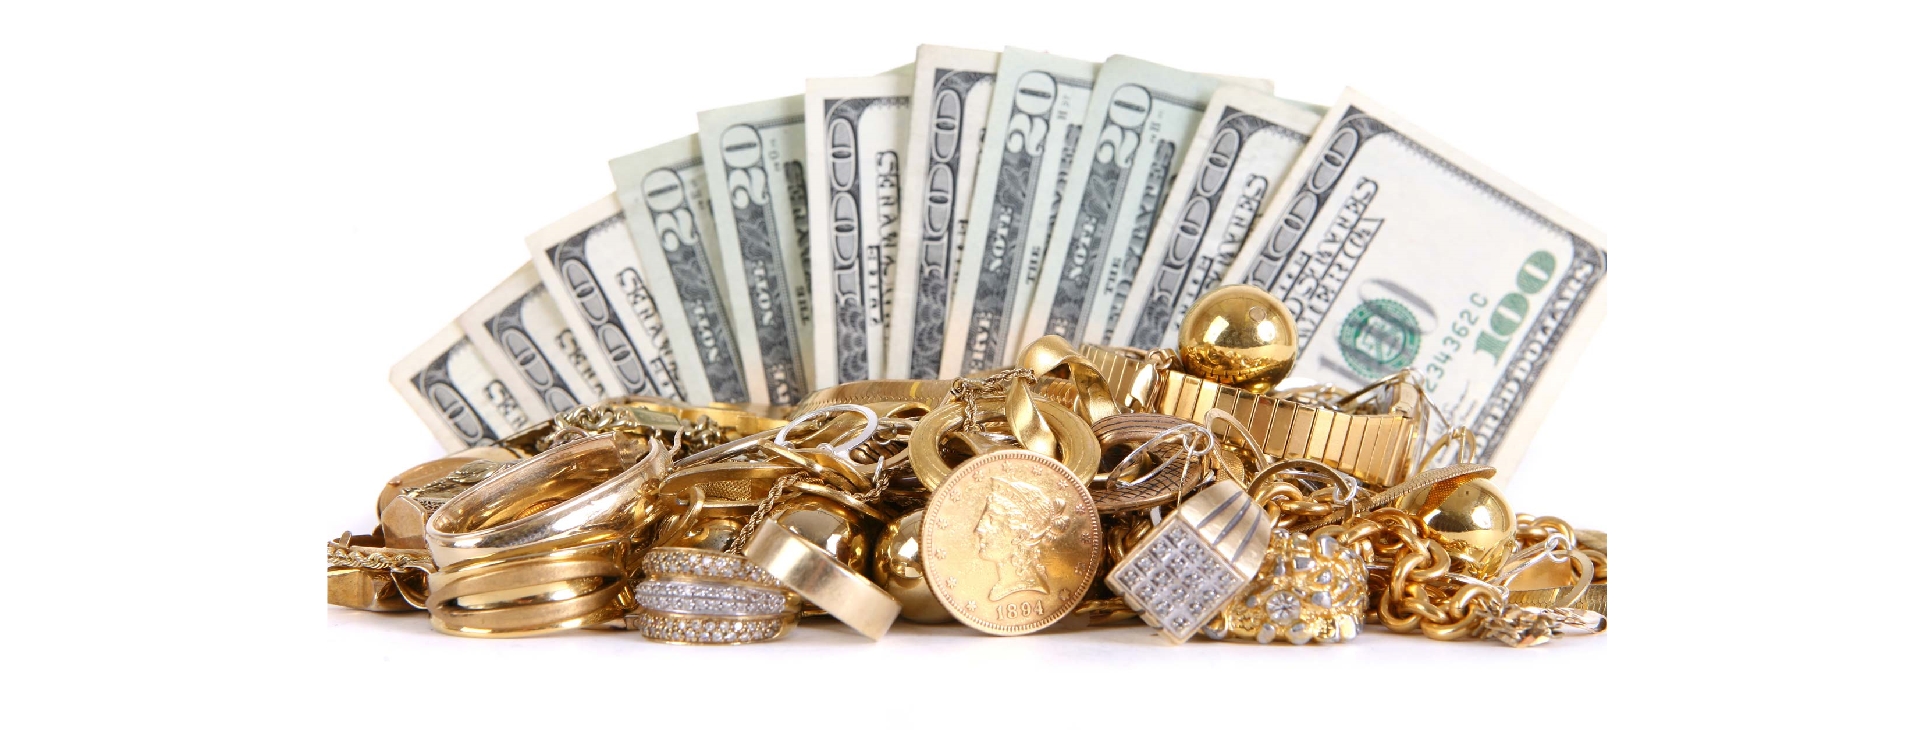 jewelry-gold-cash-pawntracker.jpg